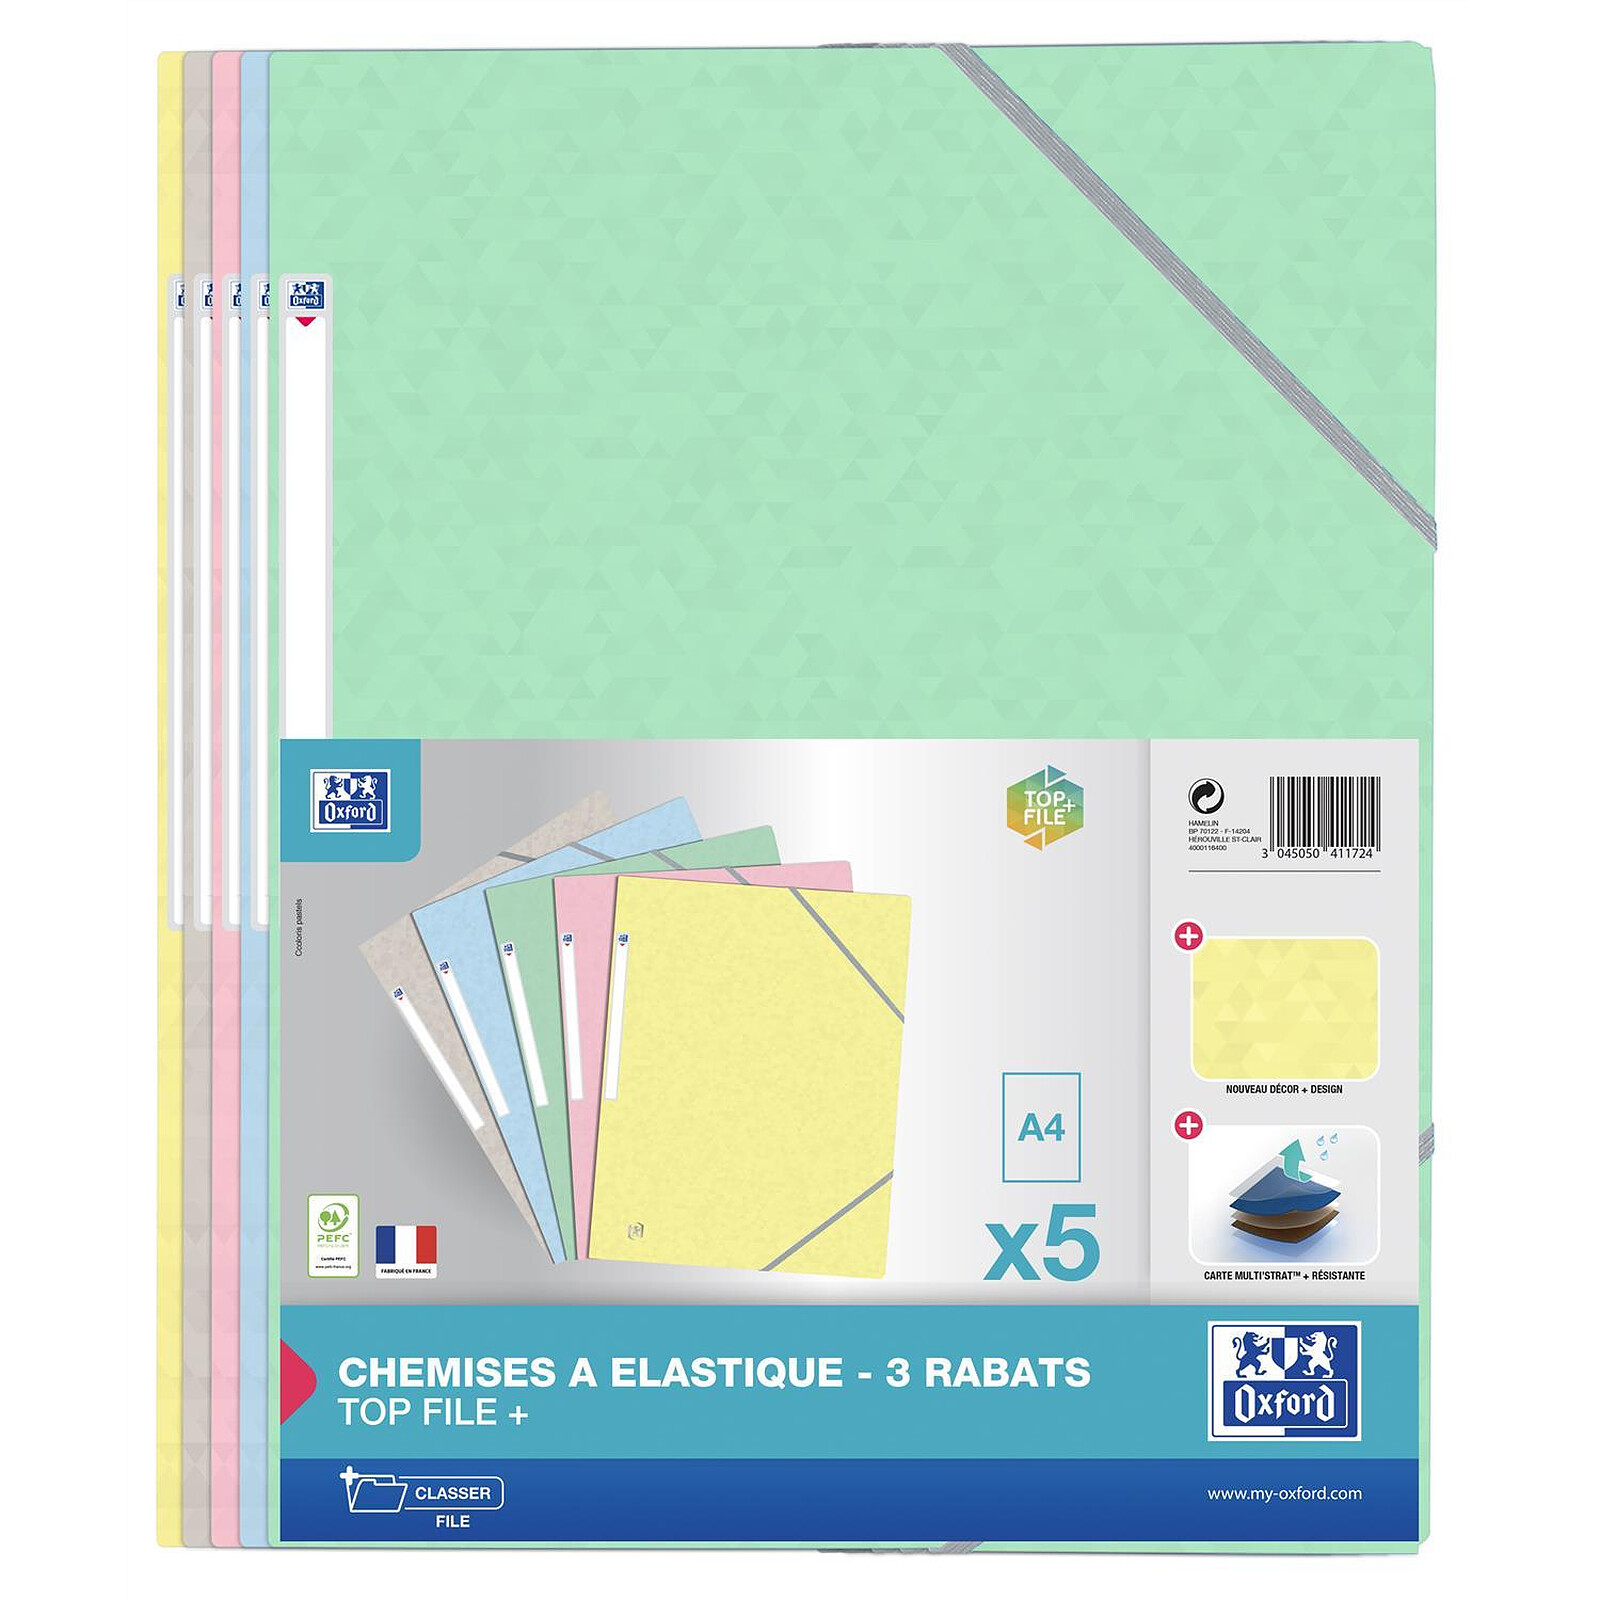 Pochette document en carton - format A4 - FAST - assorti pastel